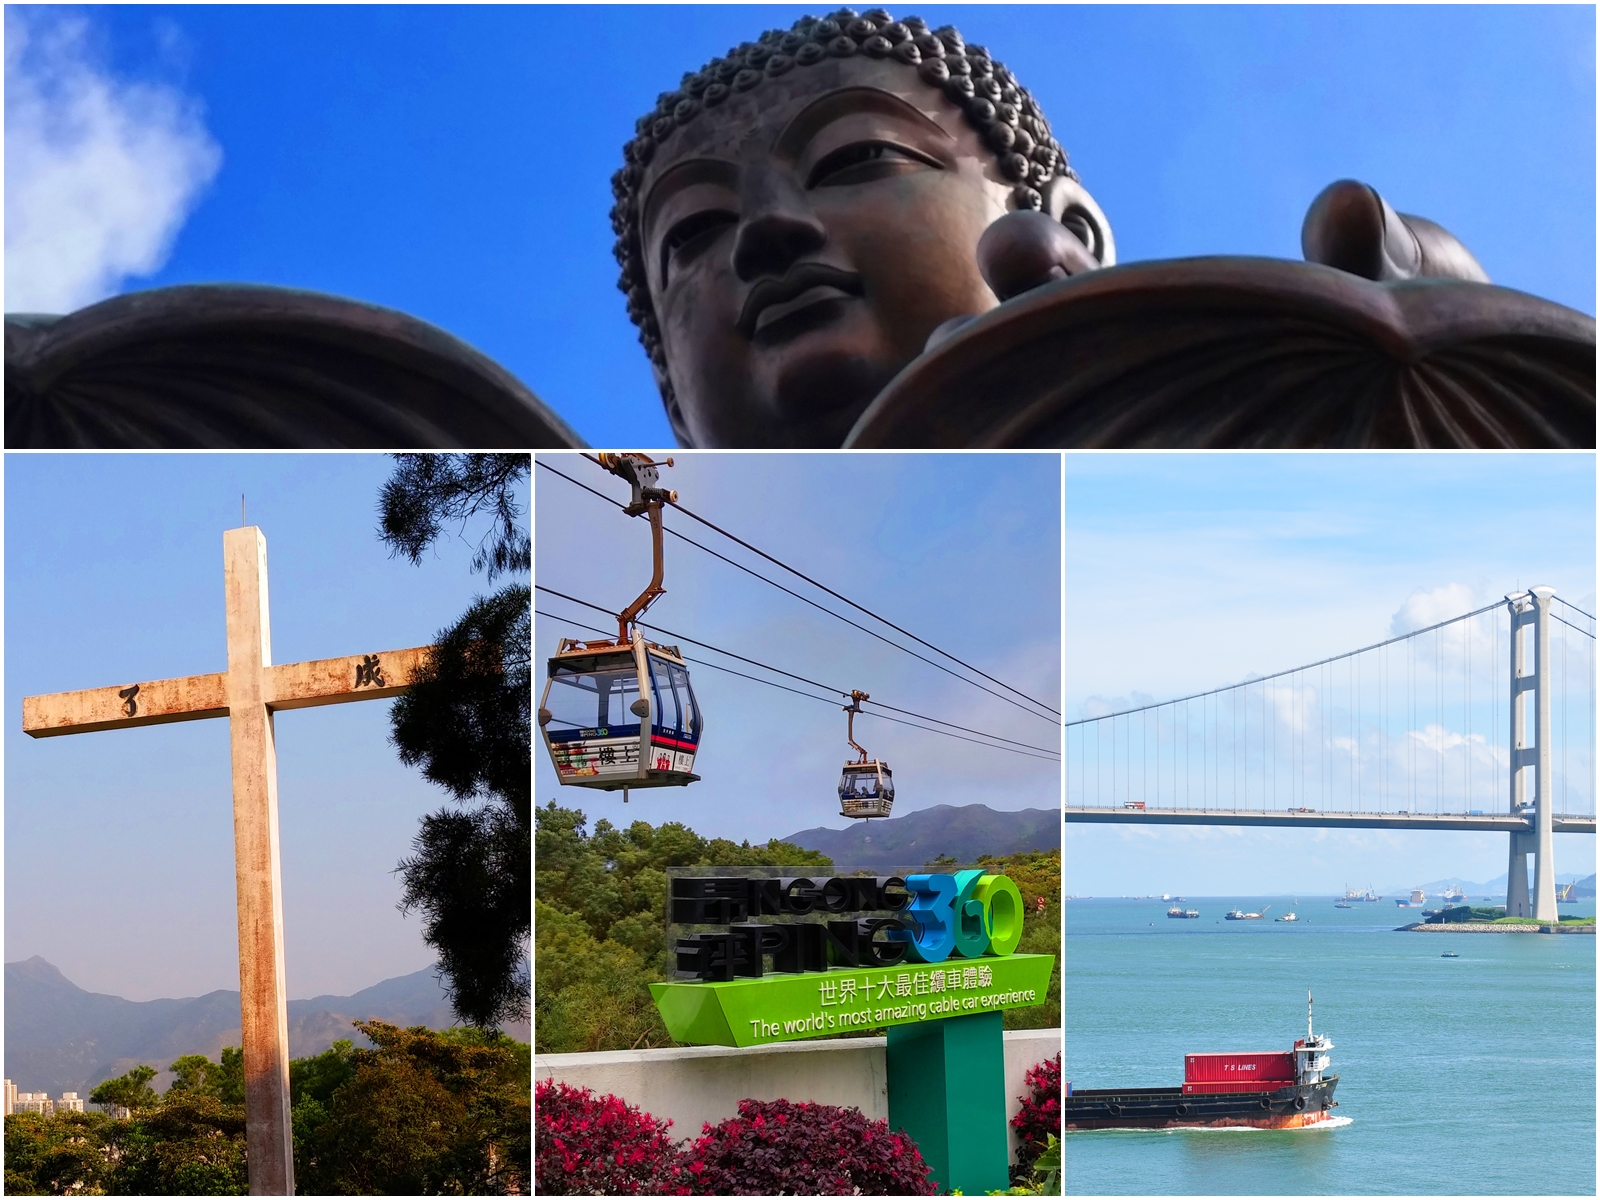 Big Buddha, Cross, Ngong Ping Cable Car, Bridge and ship